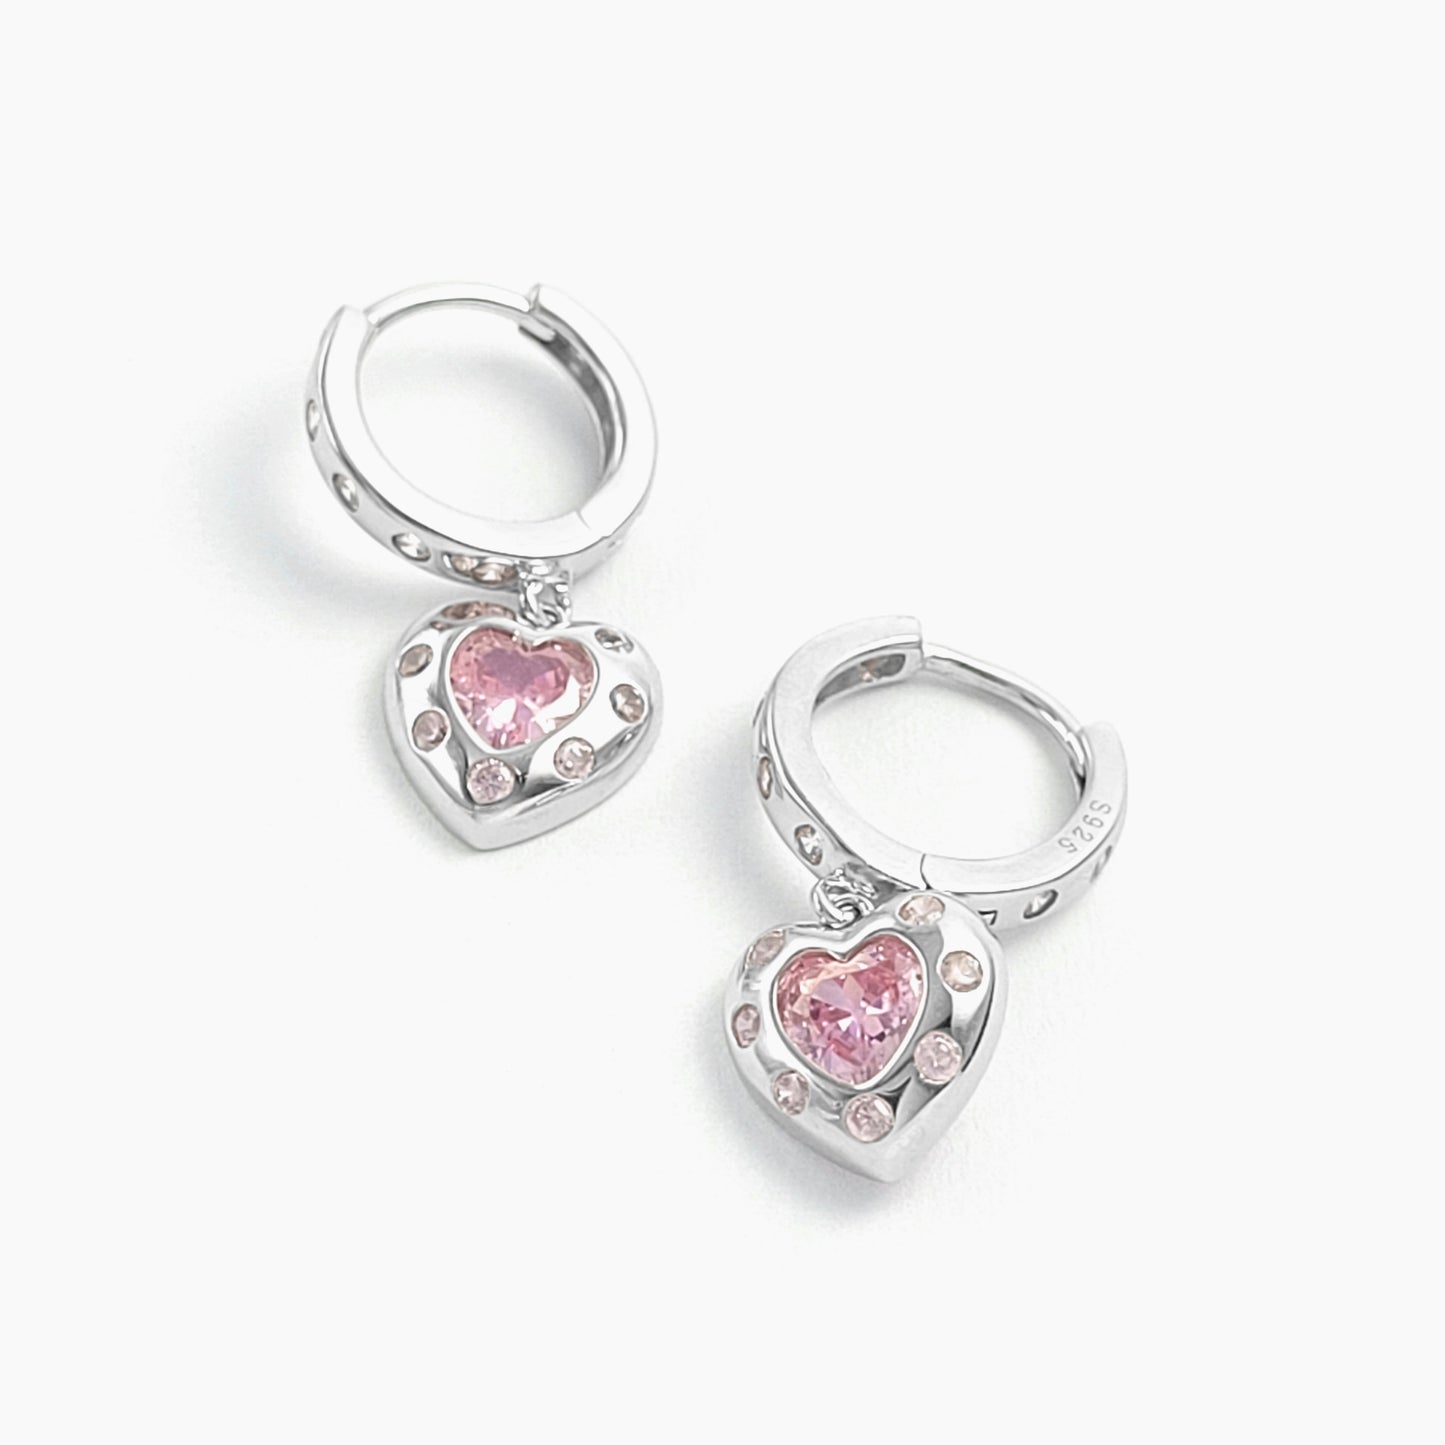 Pink Heart Hoop Earrings in Sterling Silver